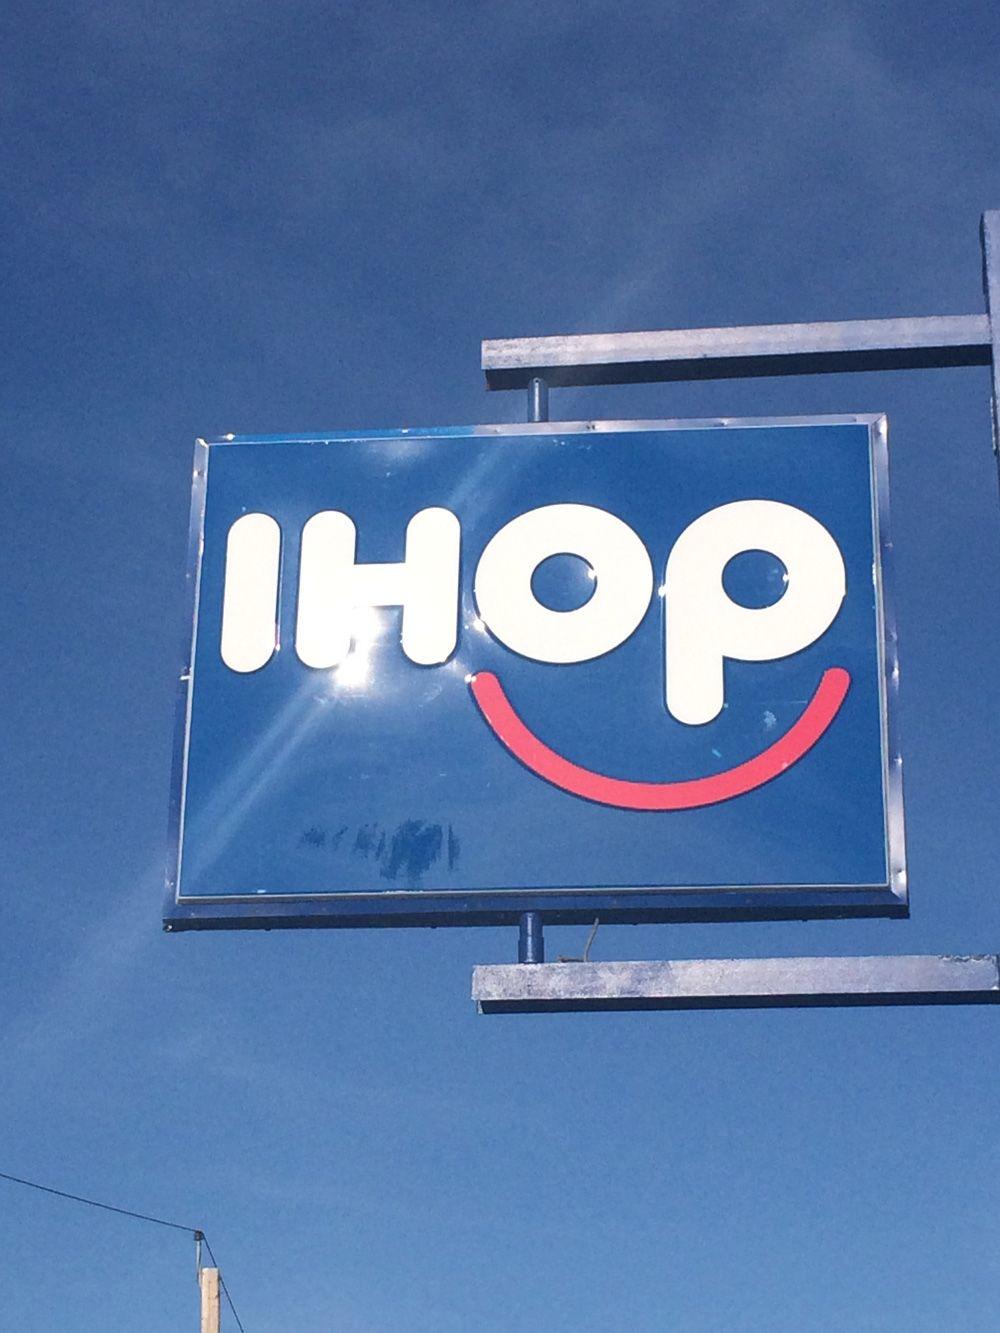 Ihop Logo - Brand New: New Logo for IHOP by Studio Tilt